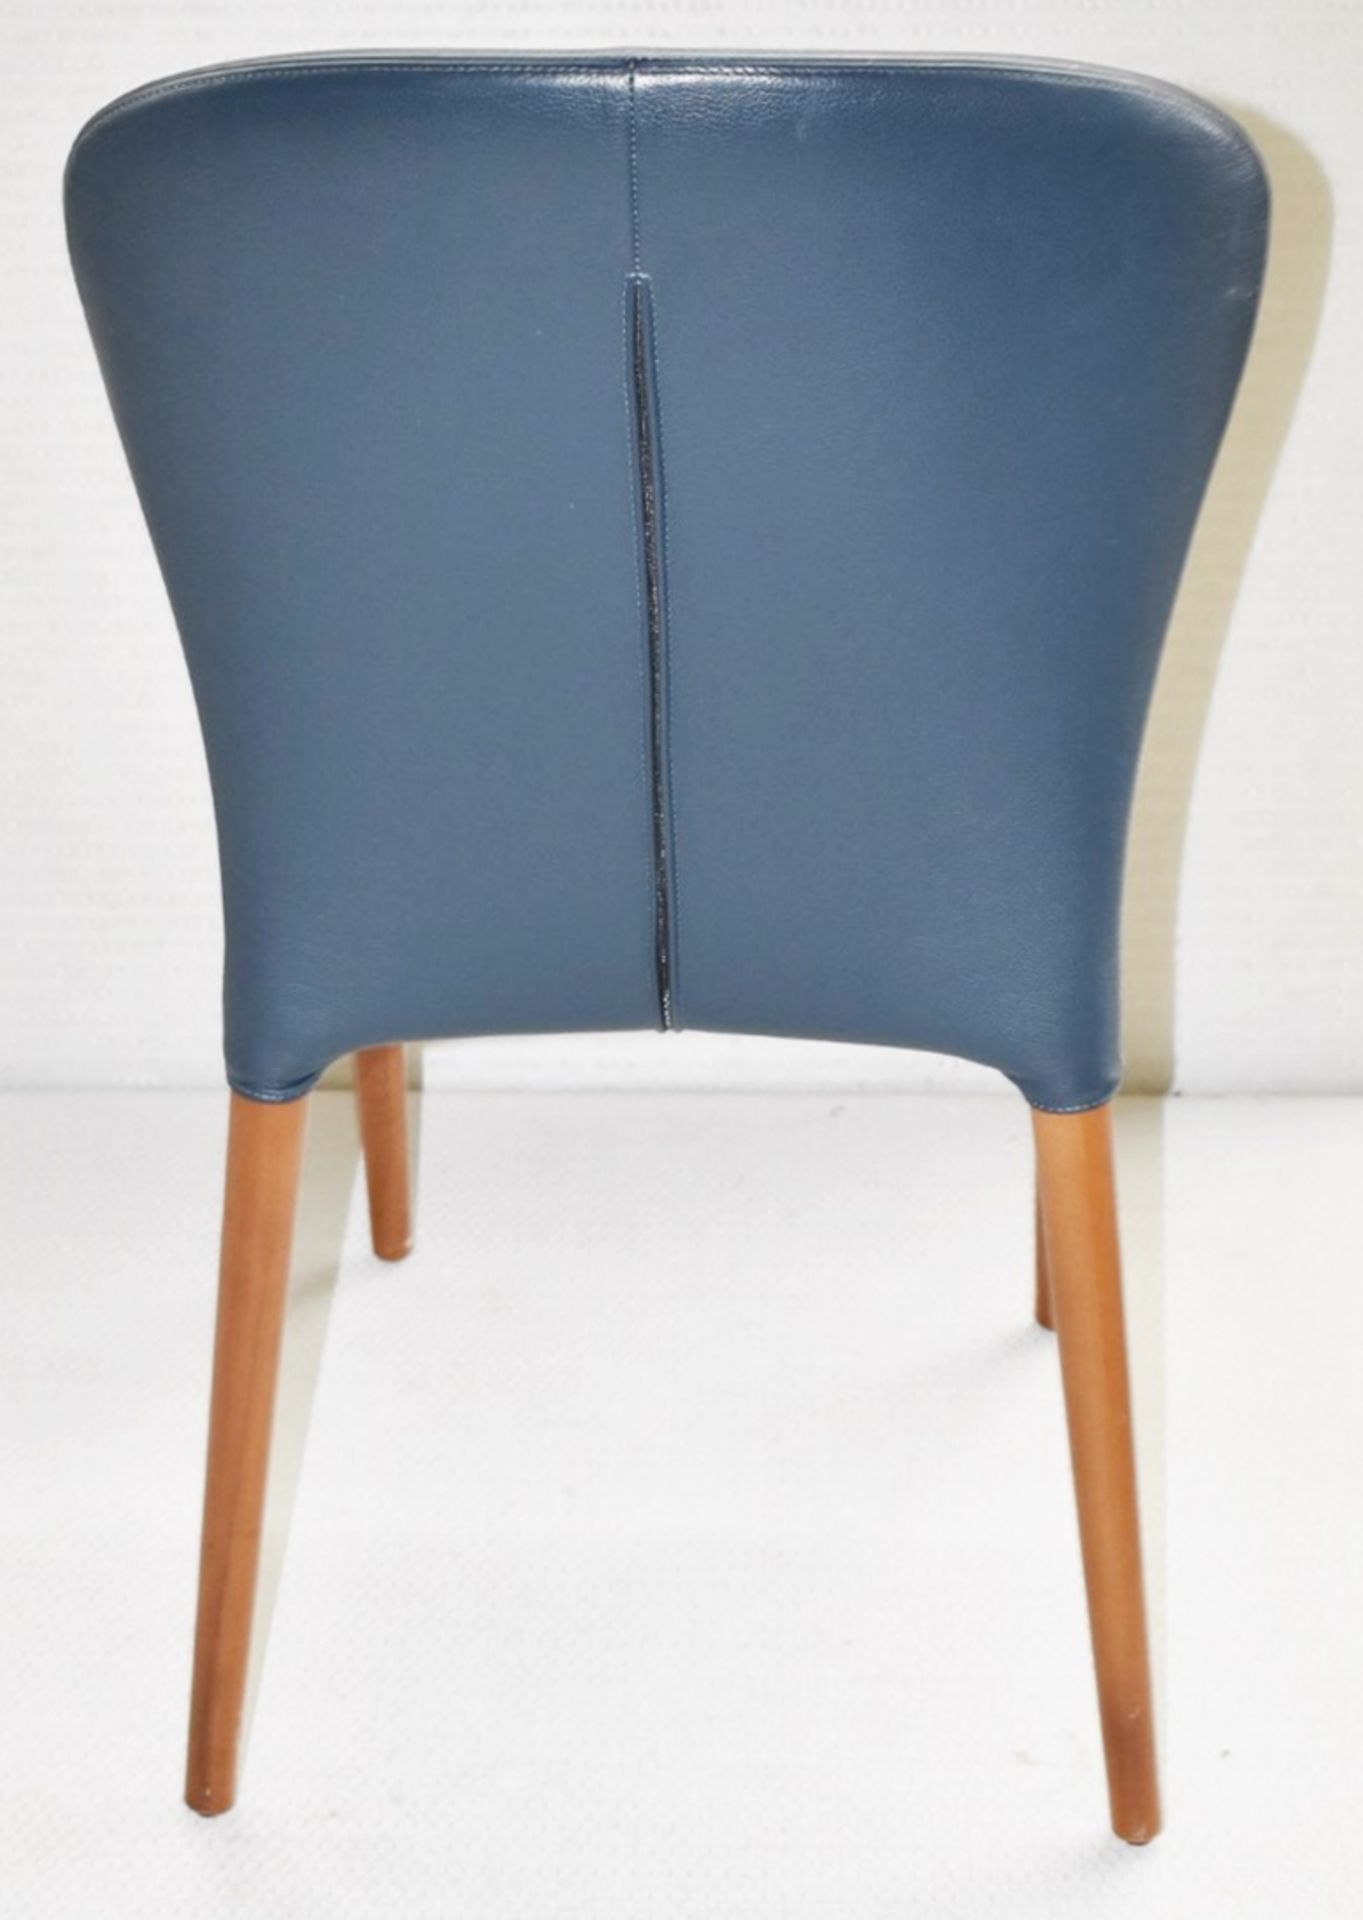 1 x PORADA 'Astrid' Italian Designer Leather Upholstered Chair, In Blue - Original RRP £1,110 - Image 3 of 5